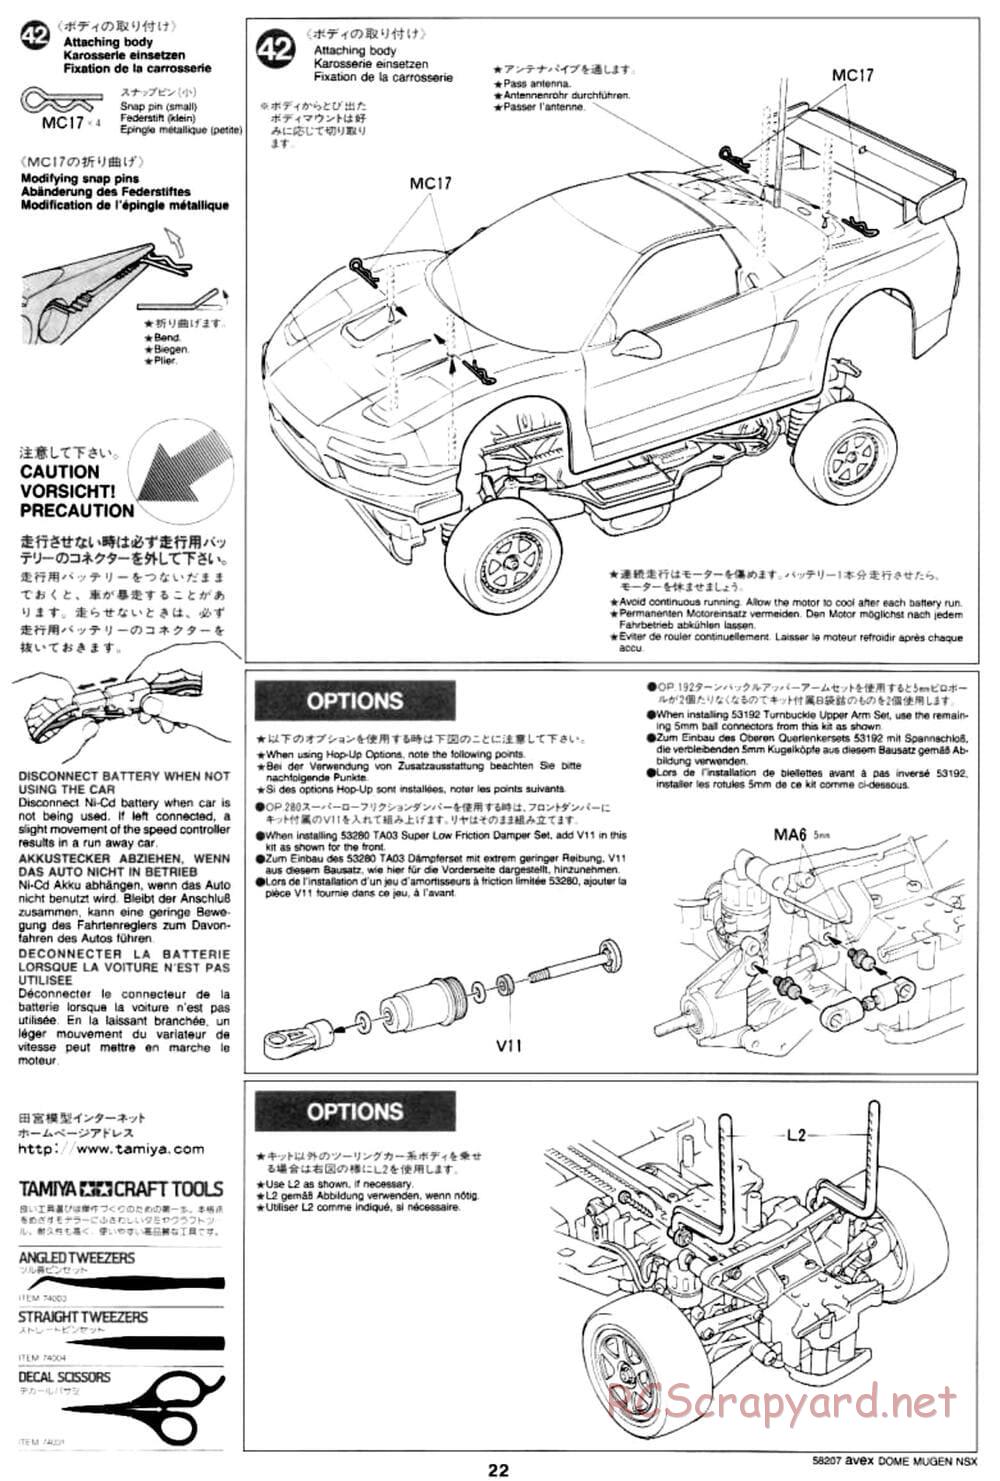 Tamiya - Avex Dome Mugen NSX - TA-03R Chassis - Manual - Page 22